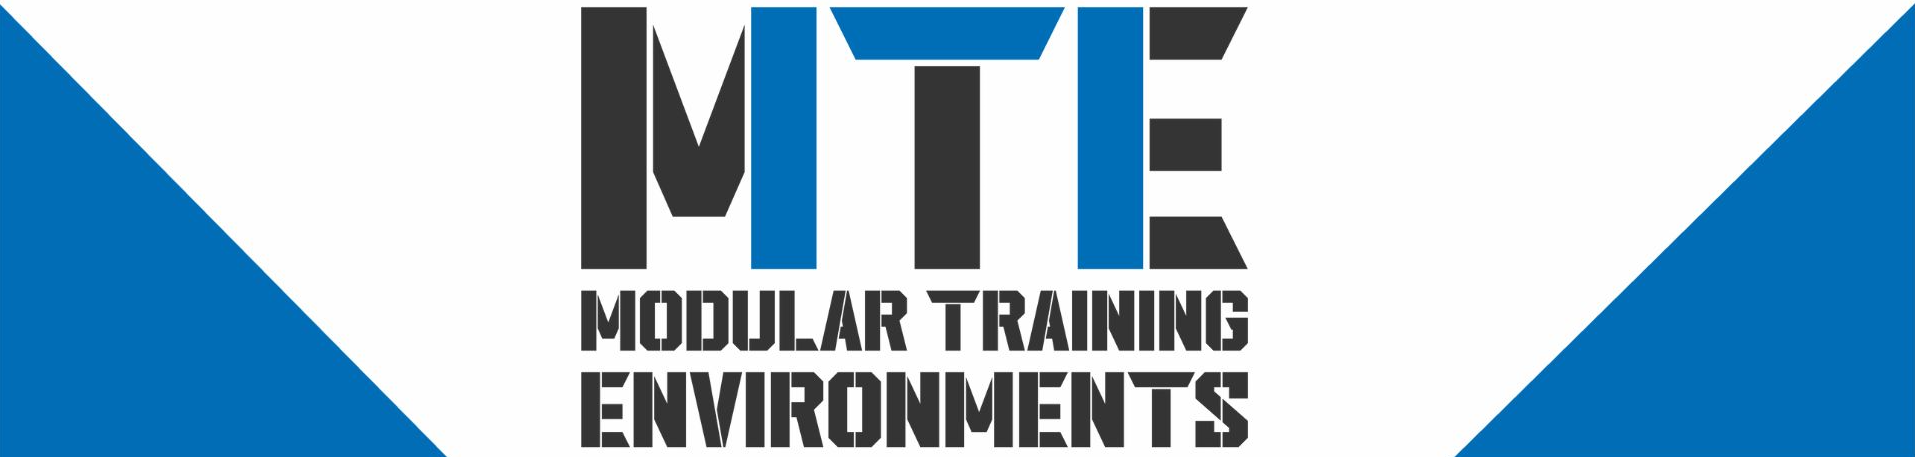 Modular Training Environments MTE